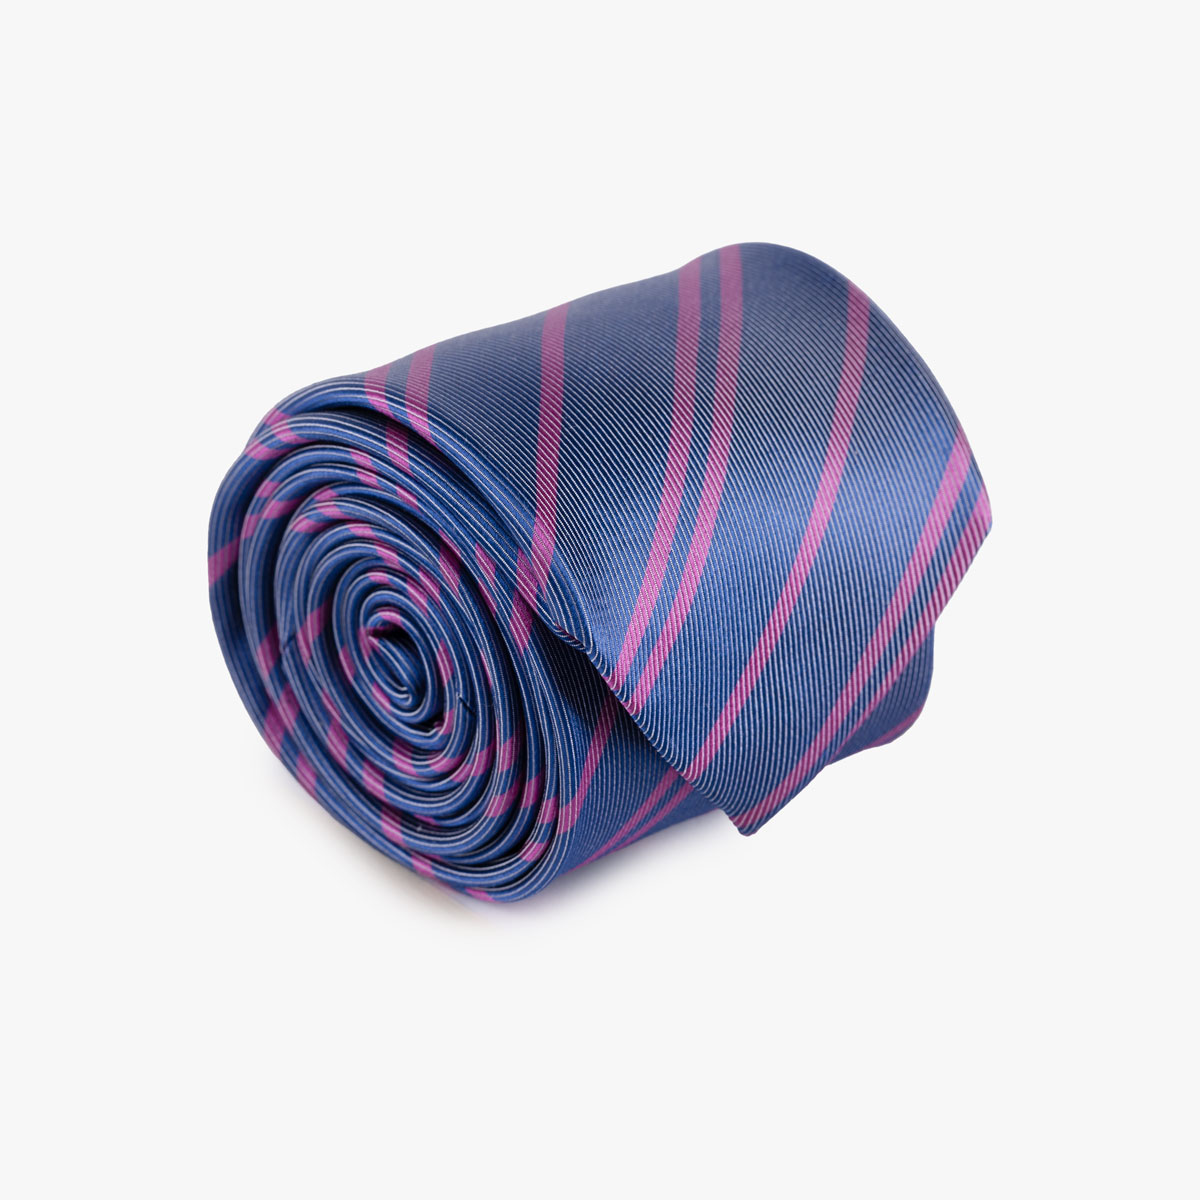 Krawatte aus Seide in dunkelblau gestreift